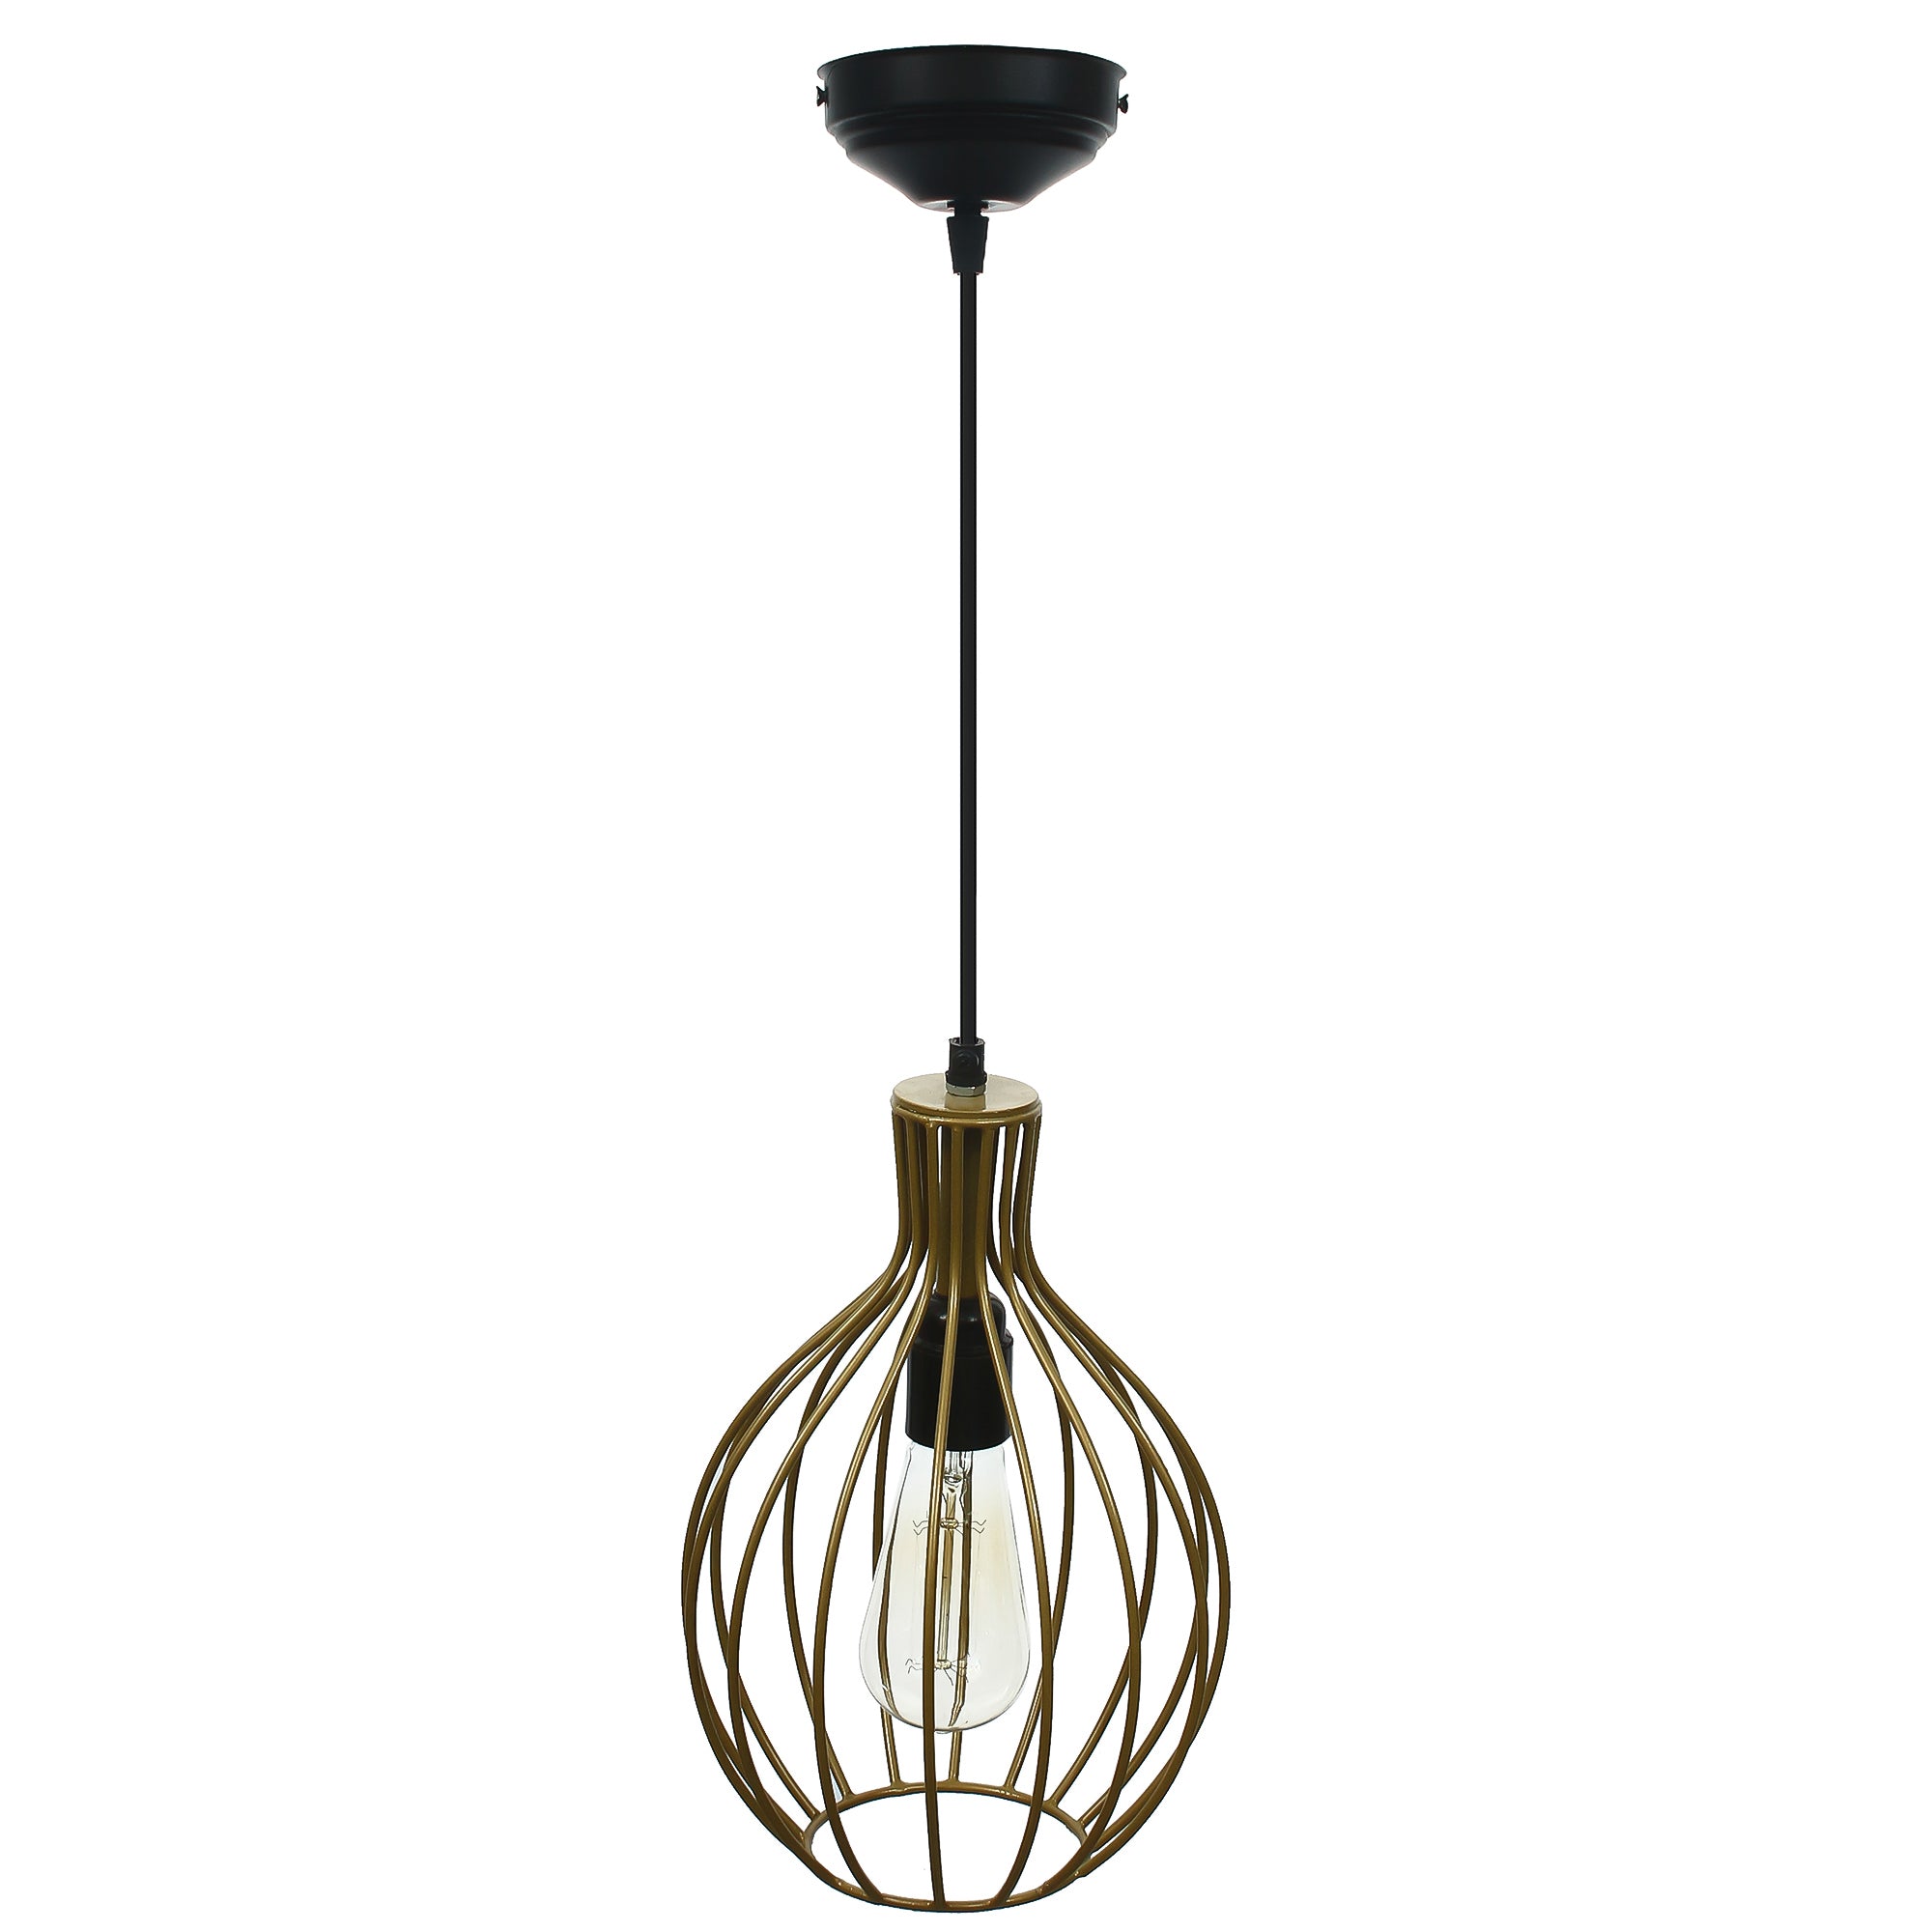 Edison Filament Golden Finish Diamond Cage Pendant Light, Ceiling Hanging Lamp for Home/Living Room/Offices/Restaurants 4